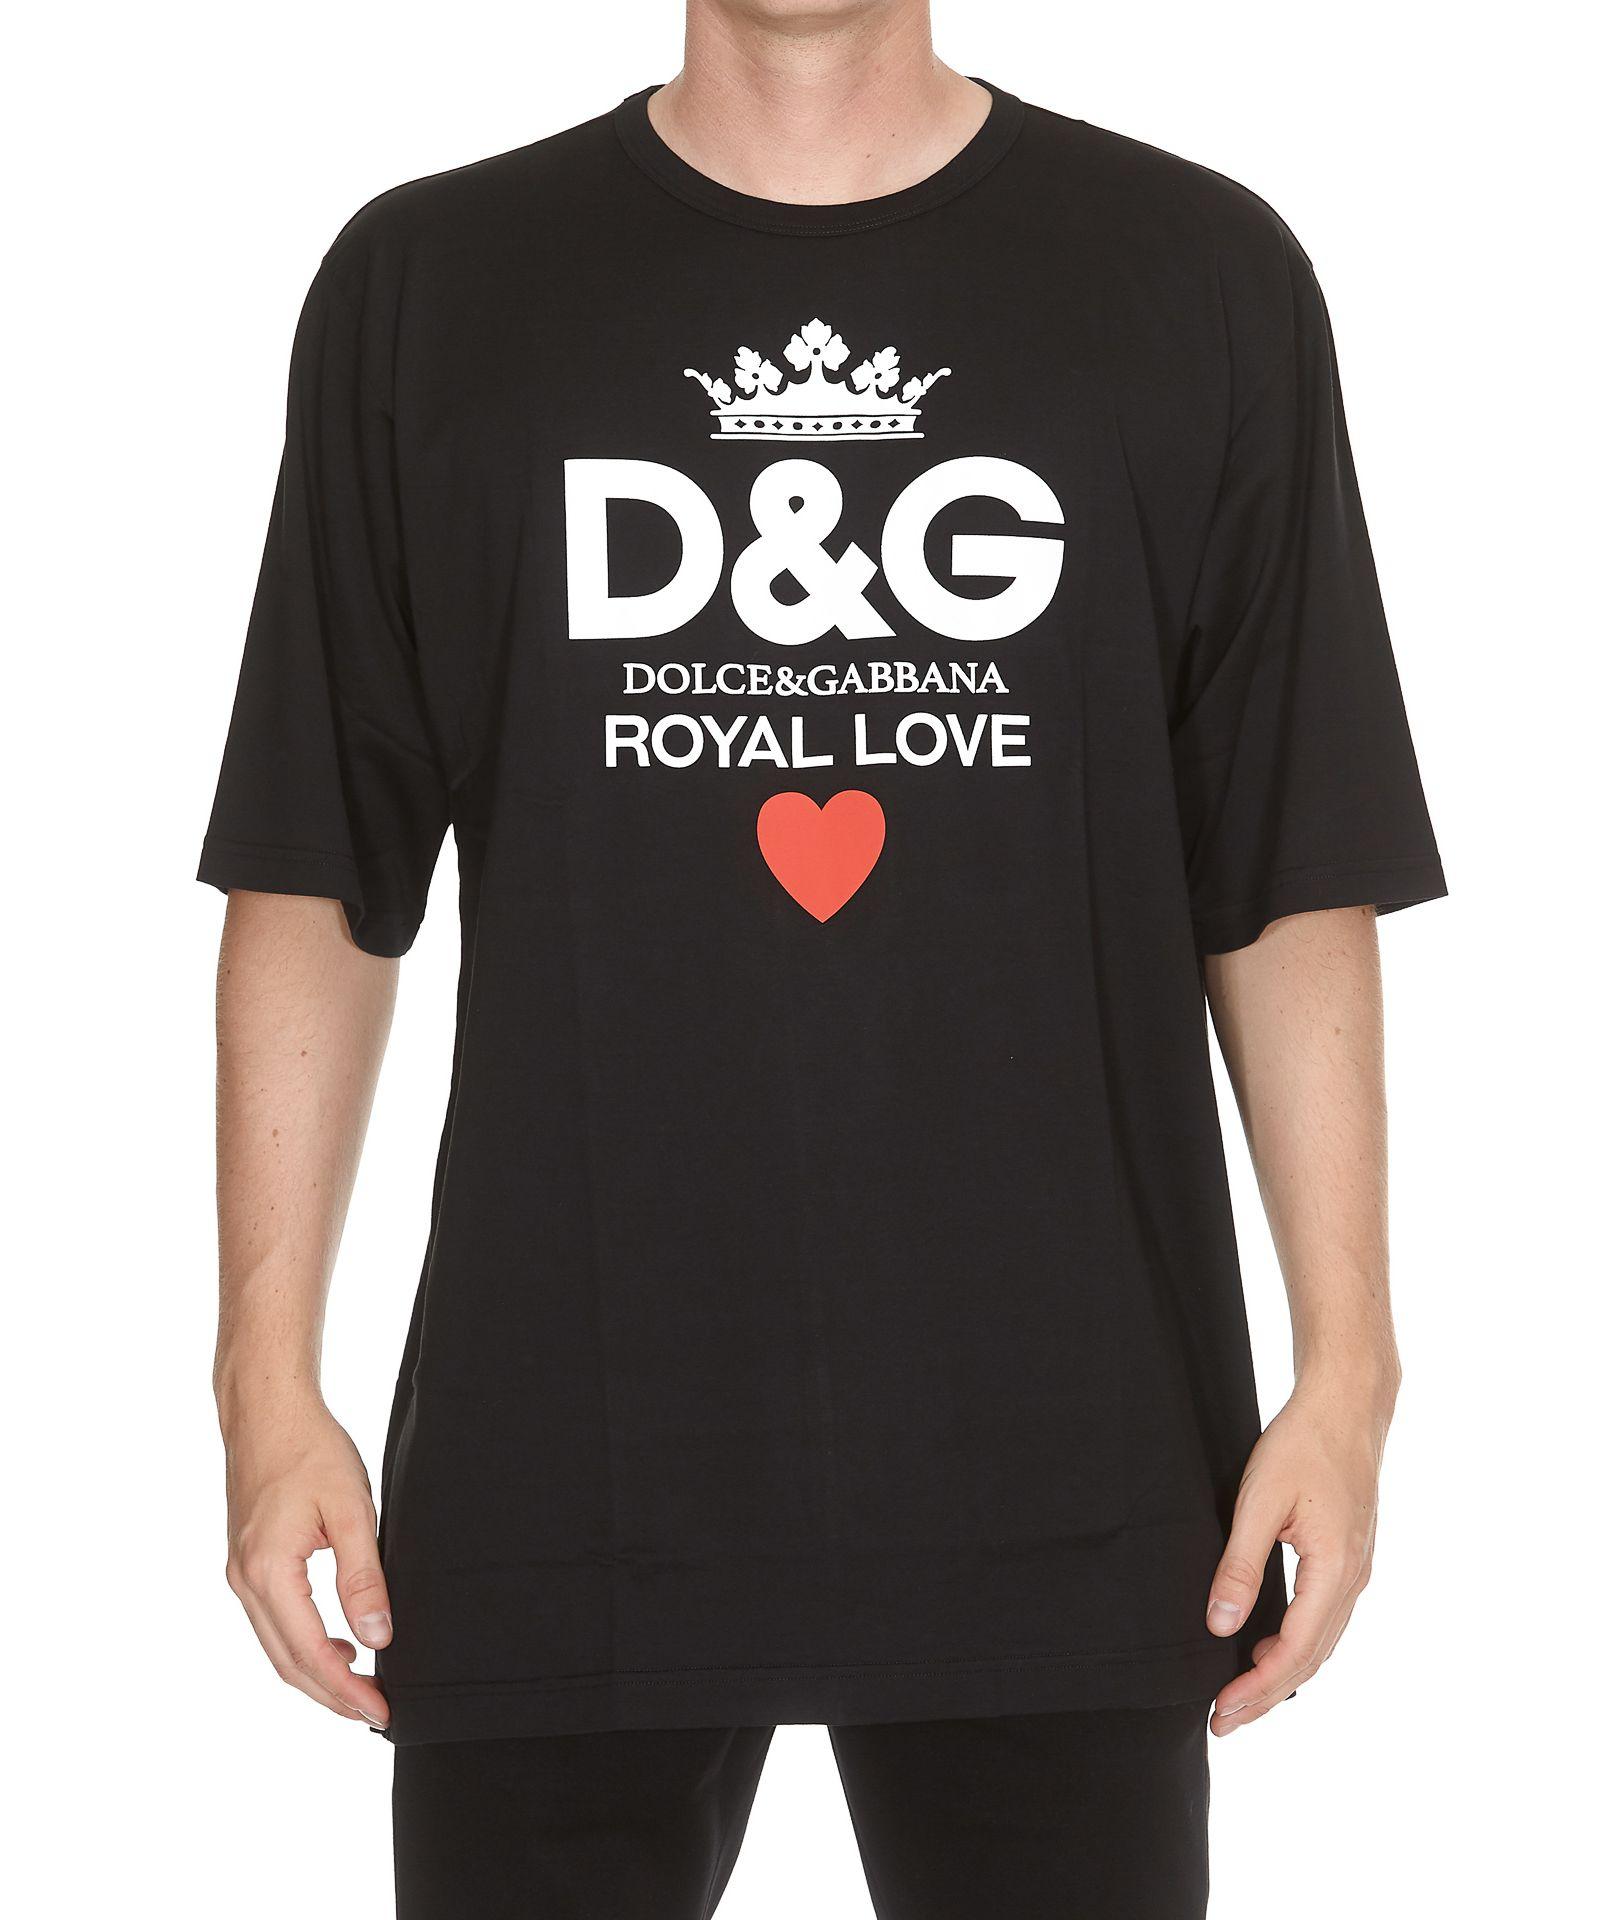 d&g royal love